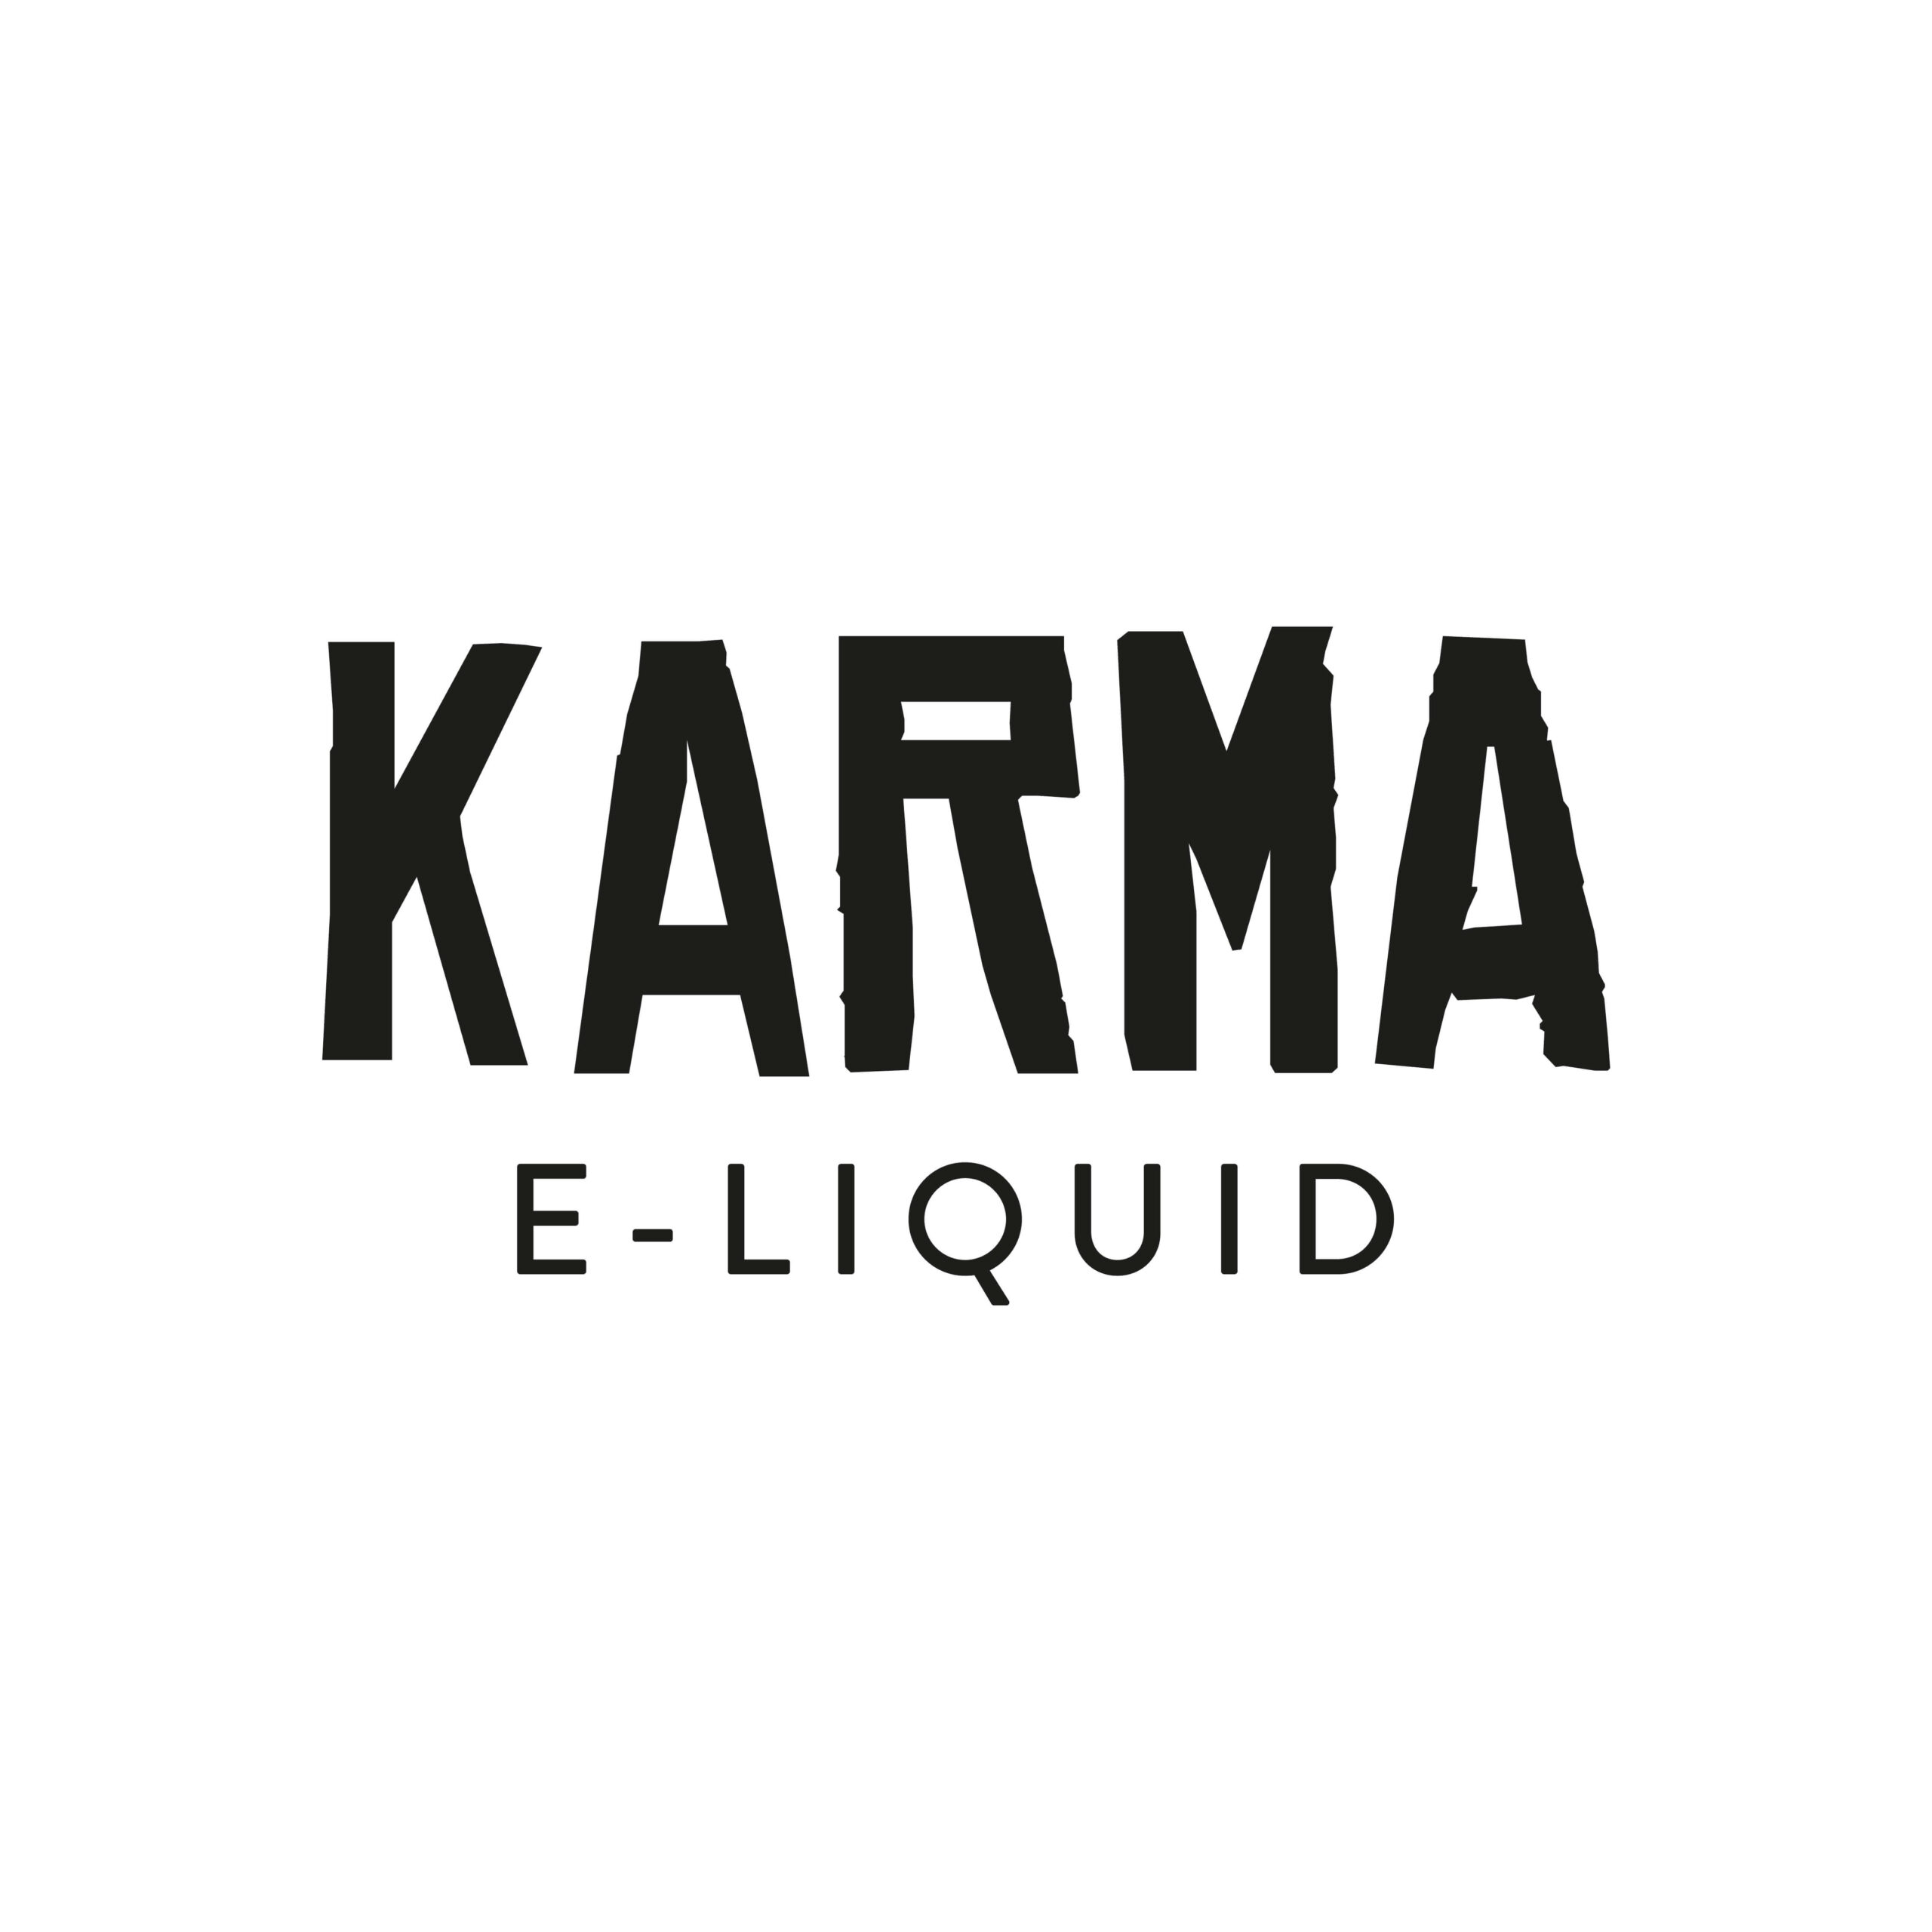 Karma e-liquid logo uk